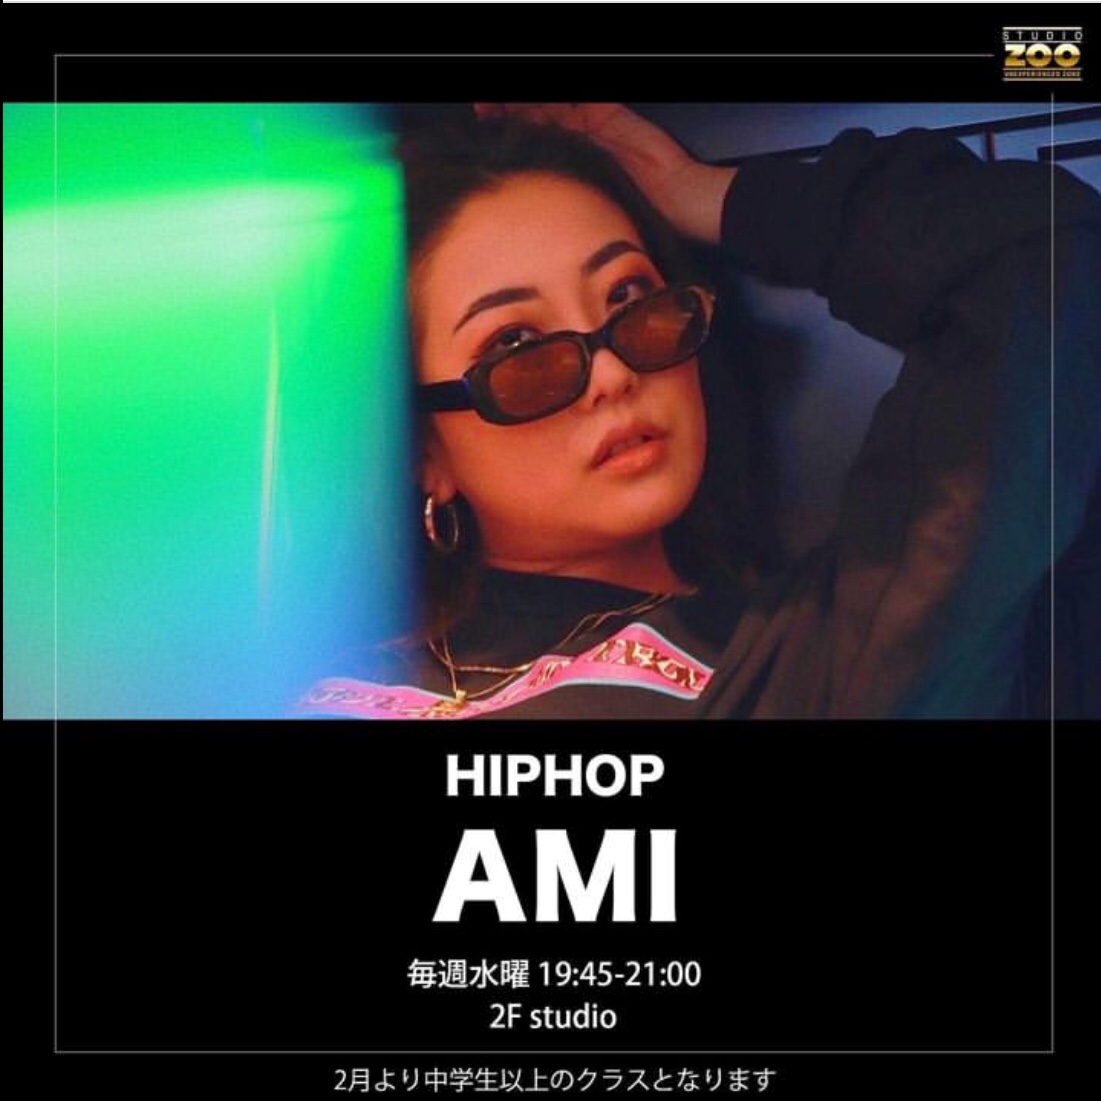 AMI/HIPHOP